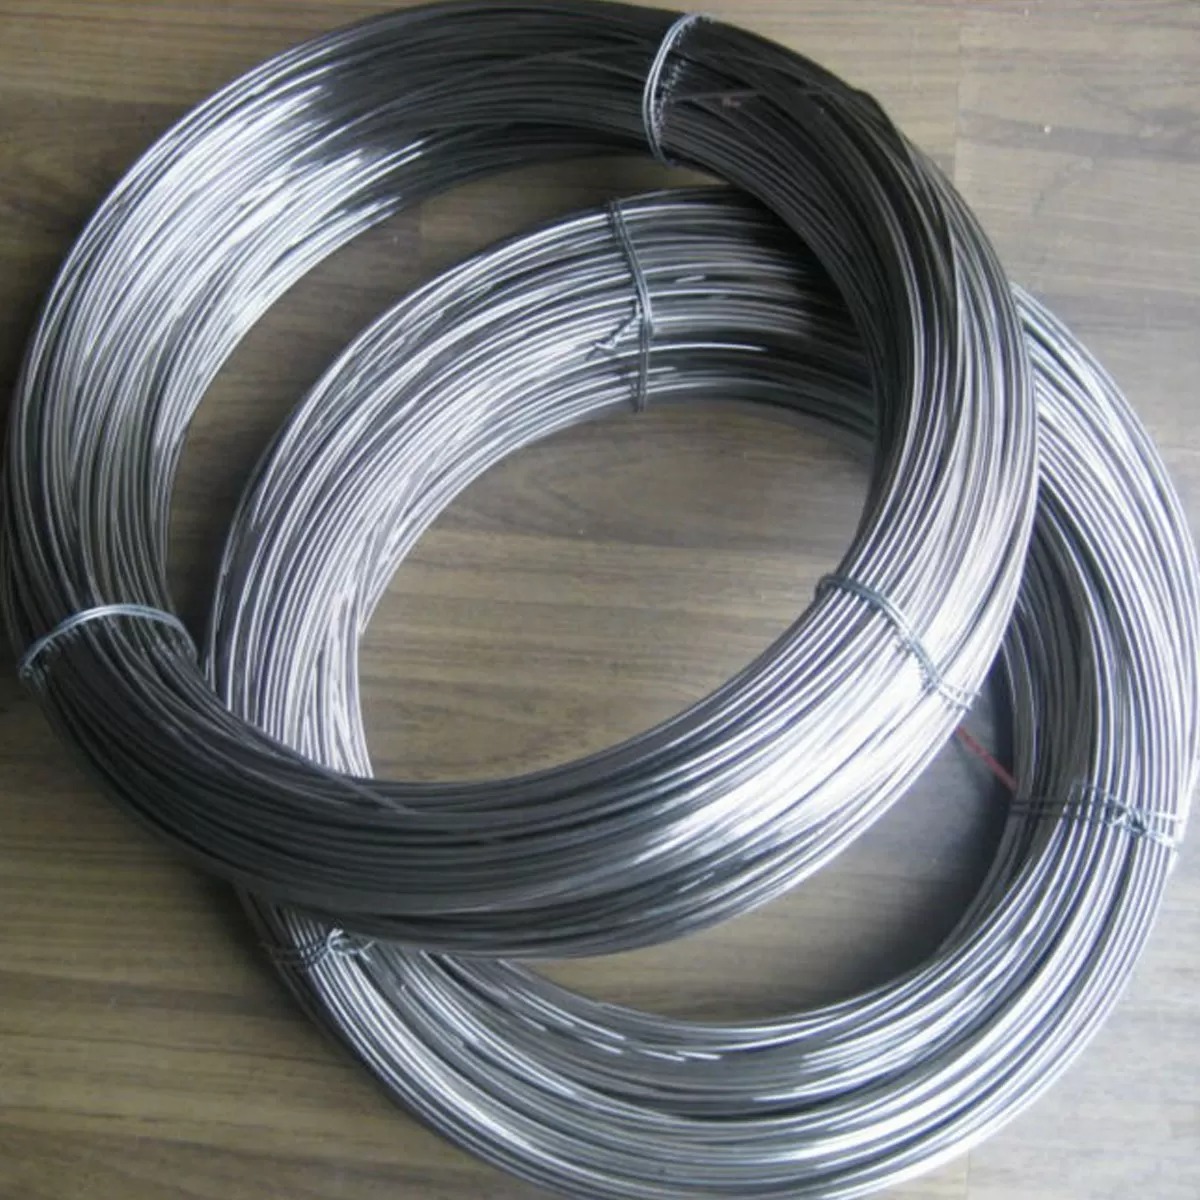 nickel-200-wires-manufacturers-suppliers-stockists-exporters